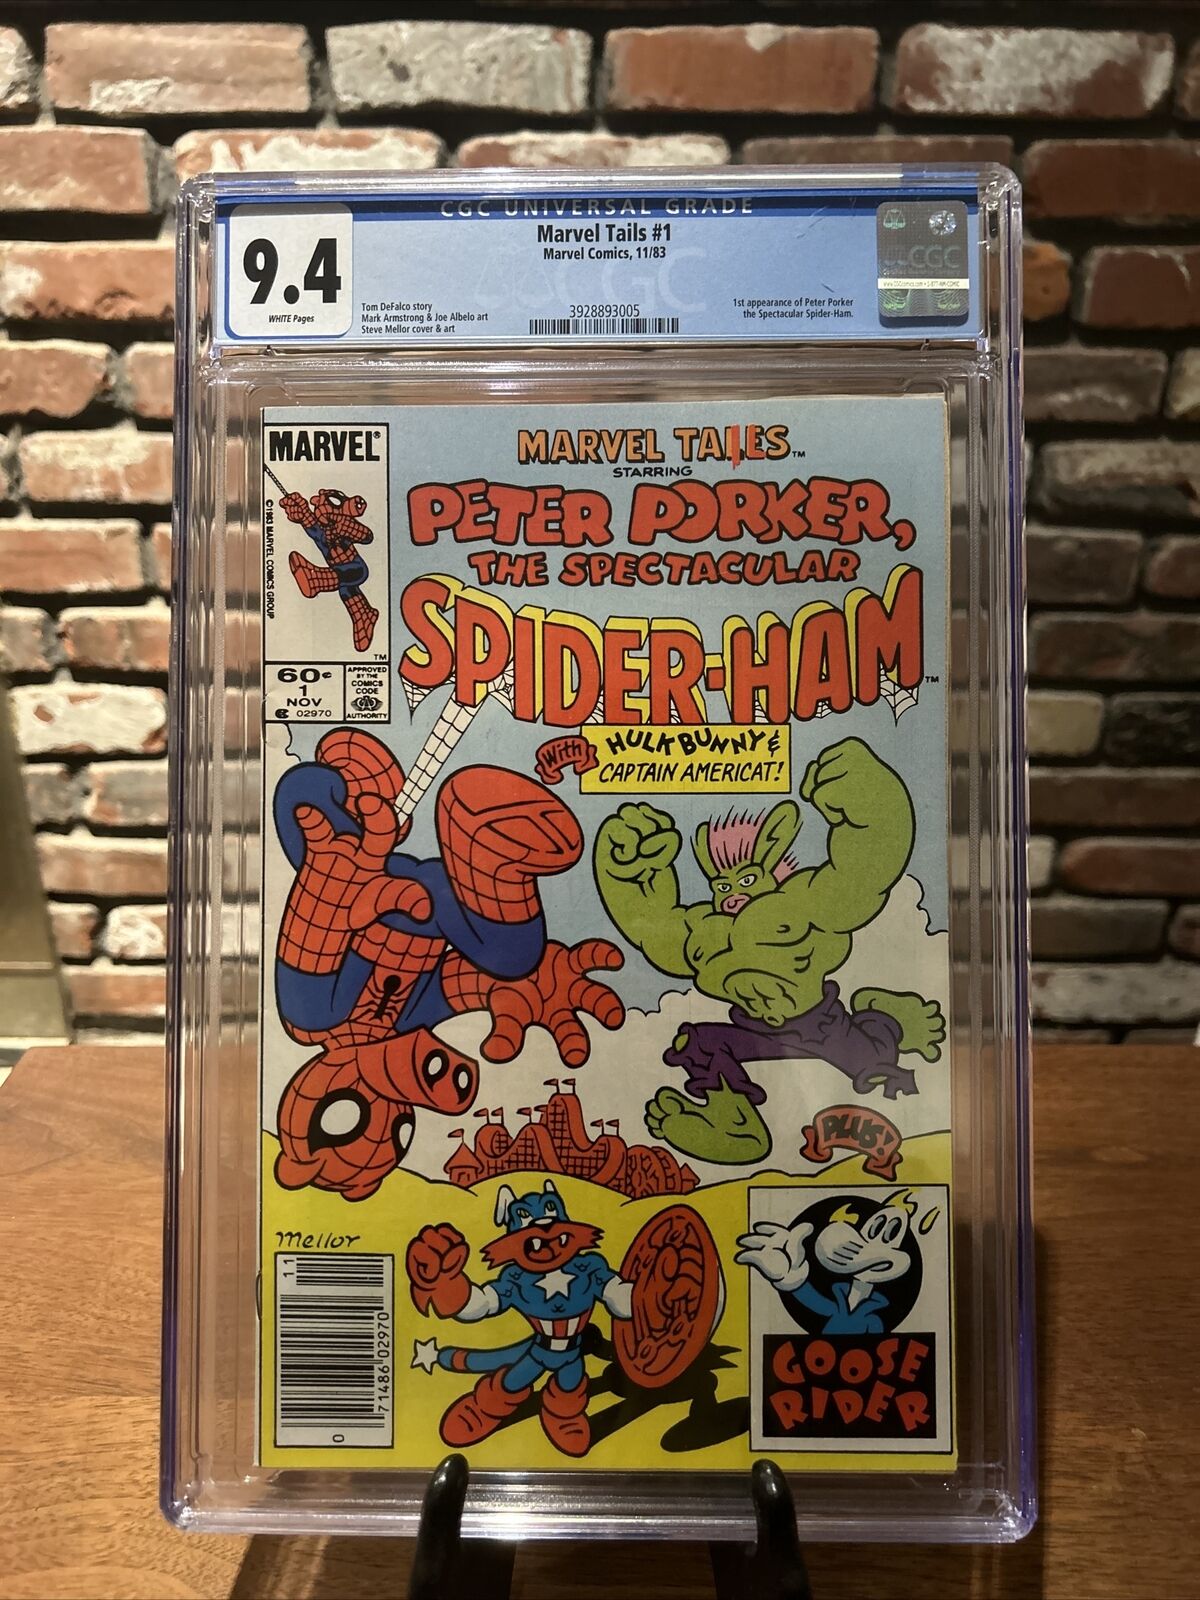 MARVEL TAILS #1 (Peter Porker Spectacular Spider-Ham 1st app) CGC 9.4 NM 1983 NS